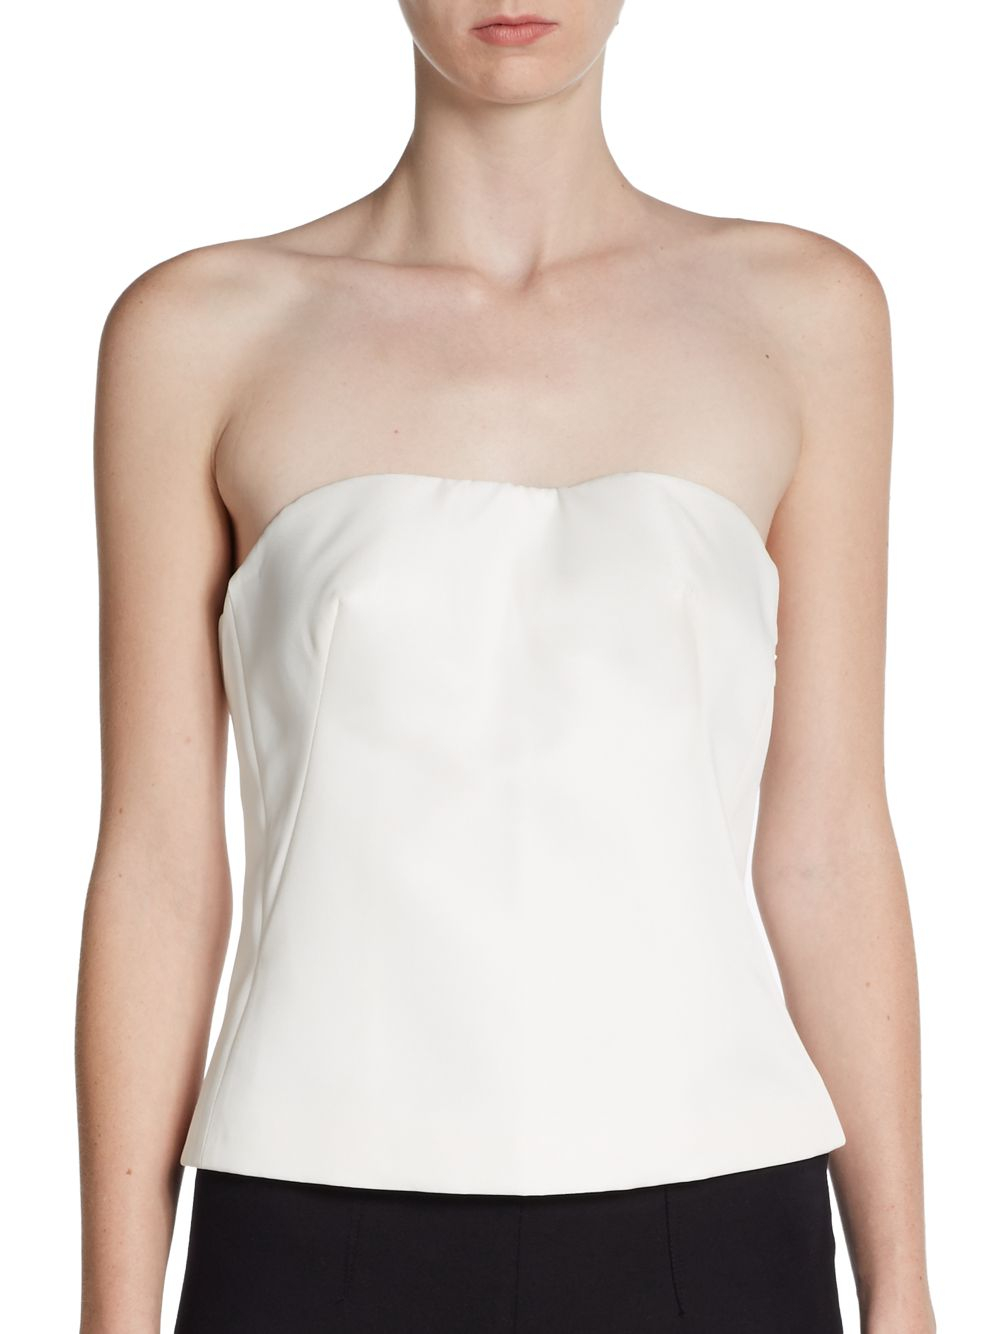 Dior Strapless Bustier Top in White - Lyst